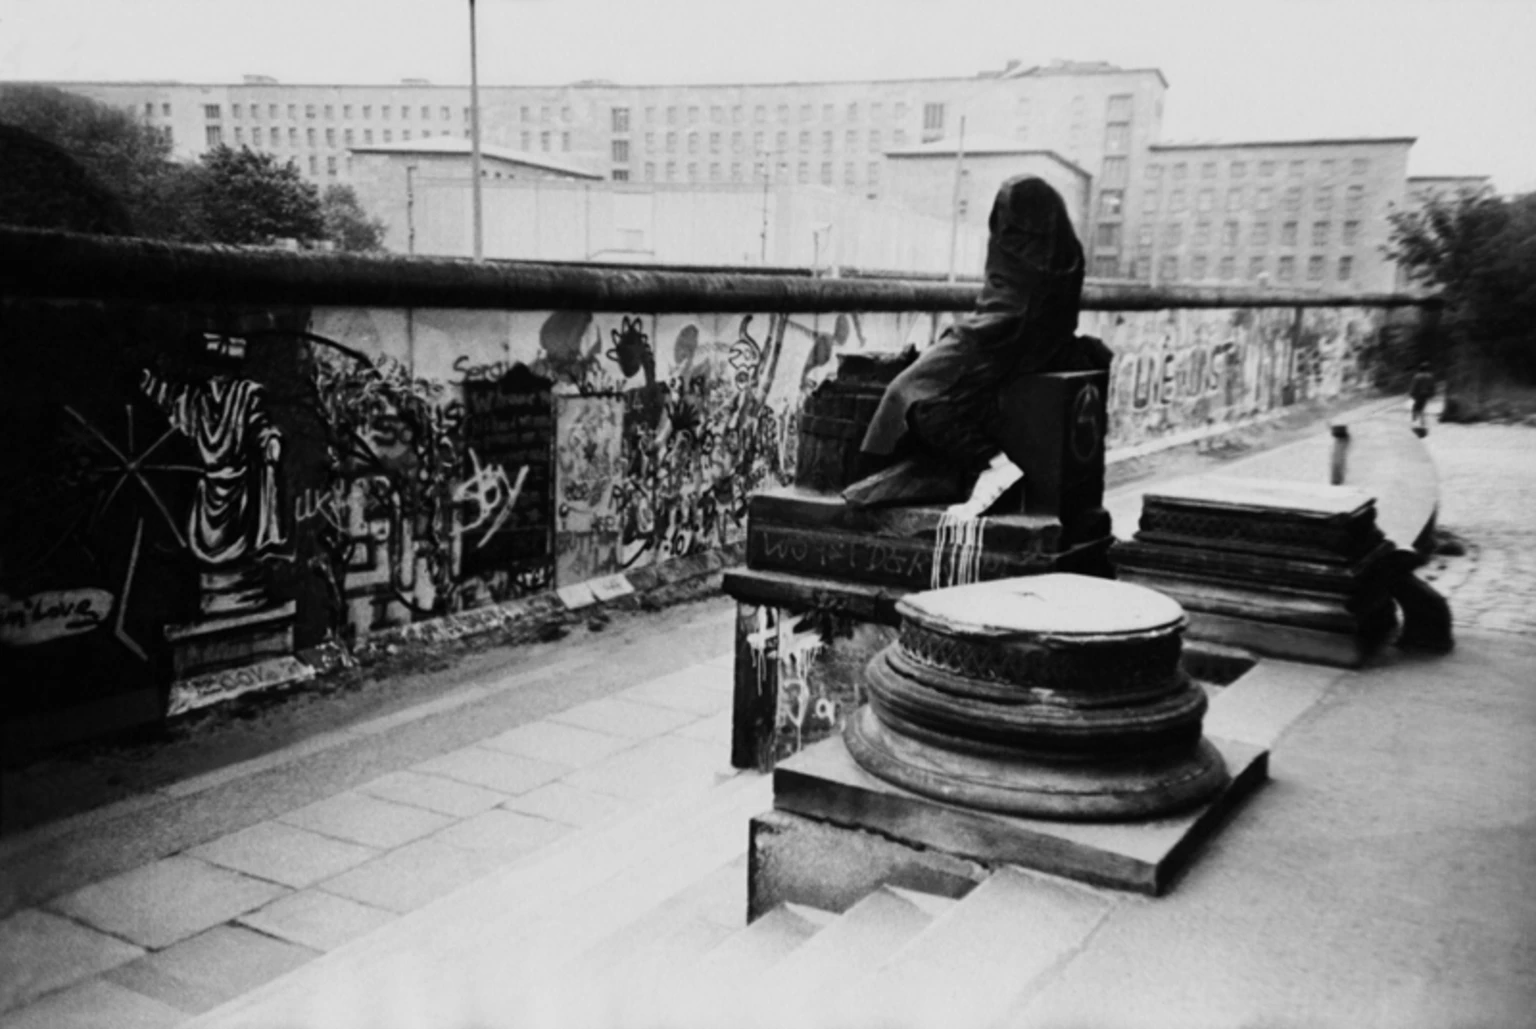 Searching of Re - Berlin, 1989